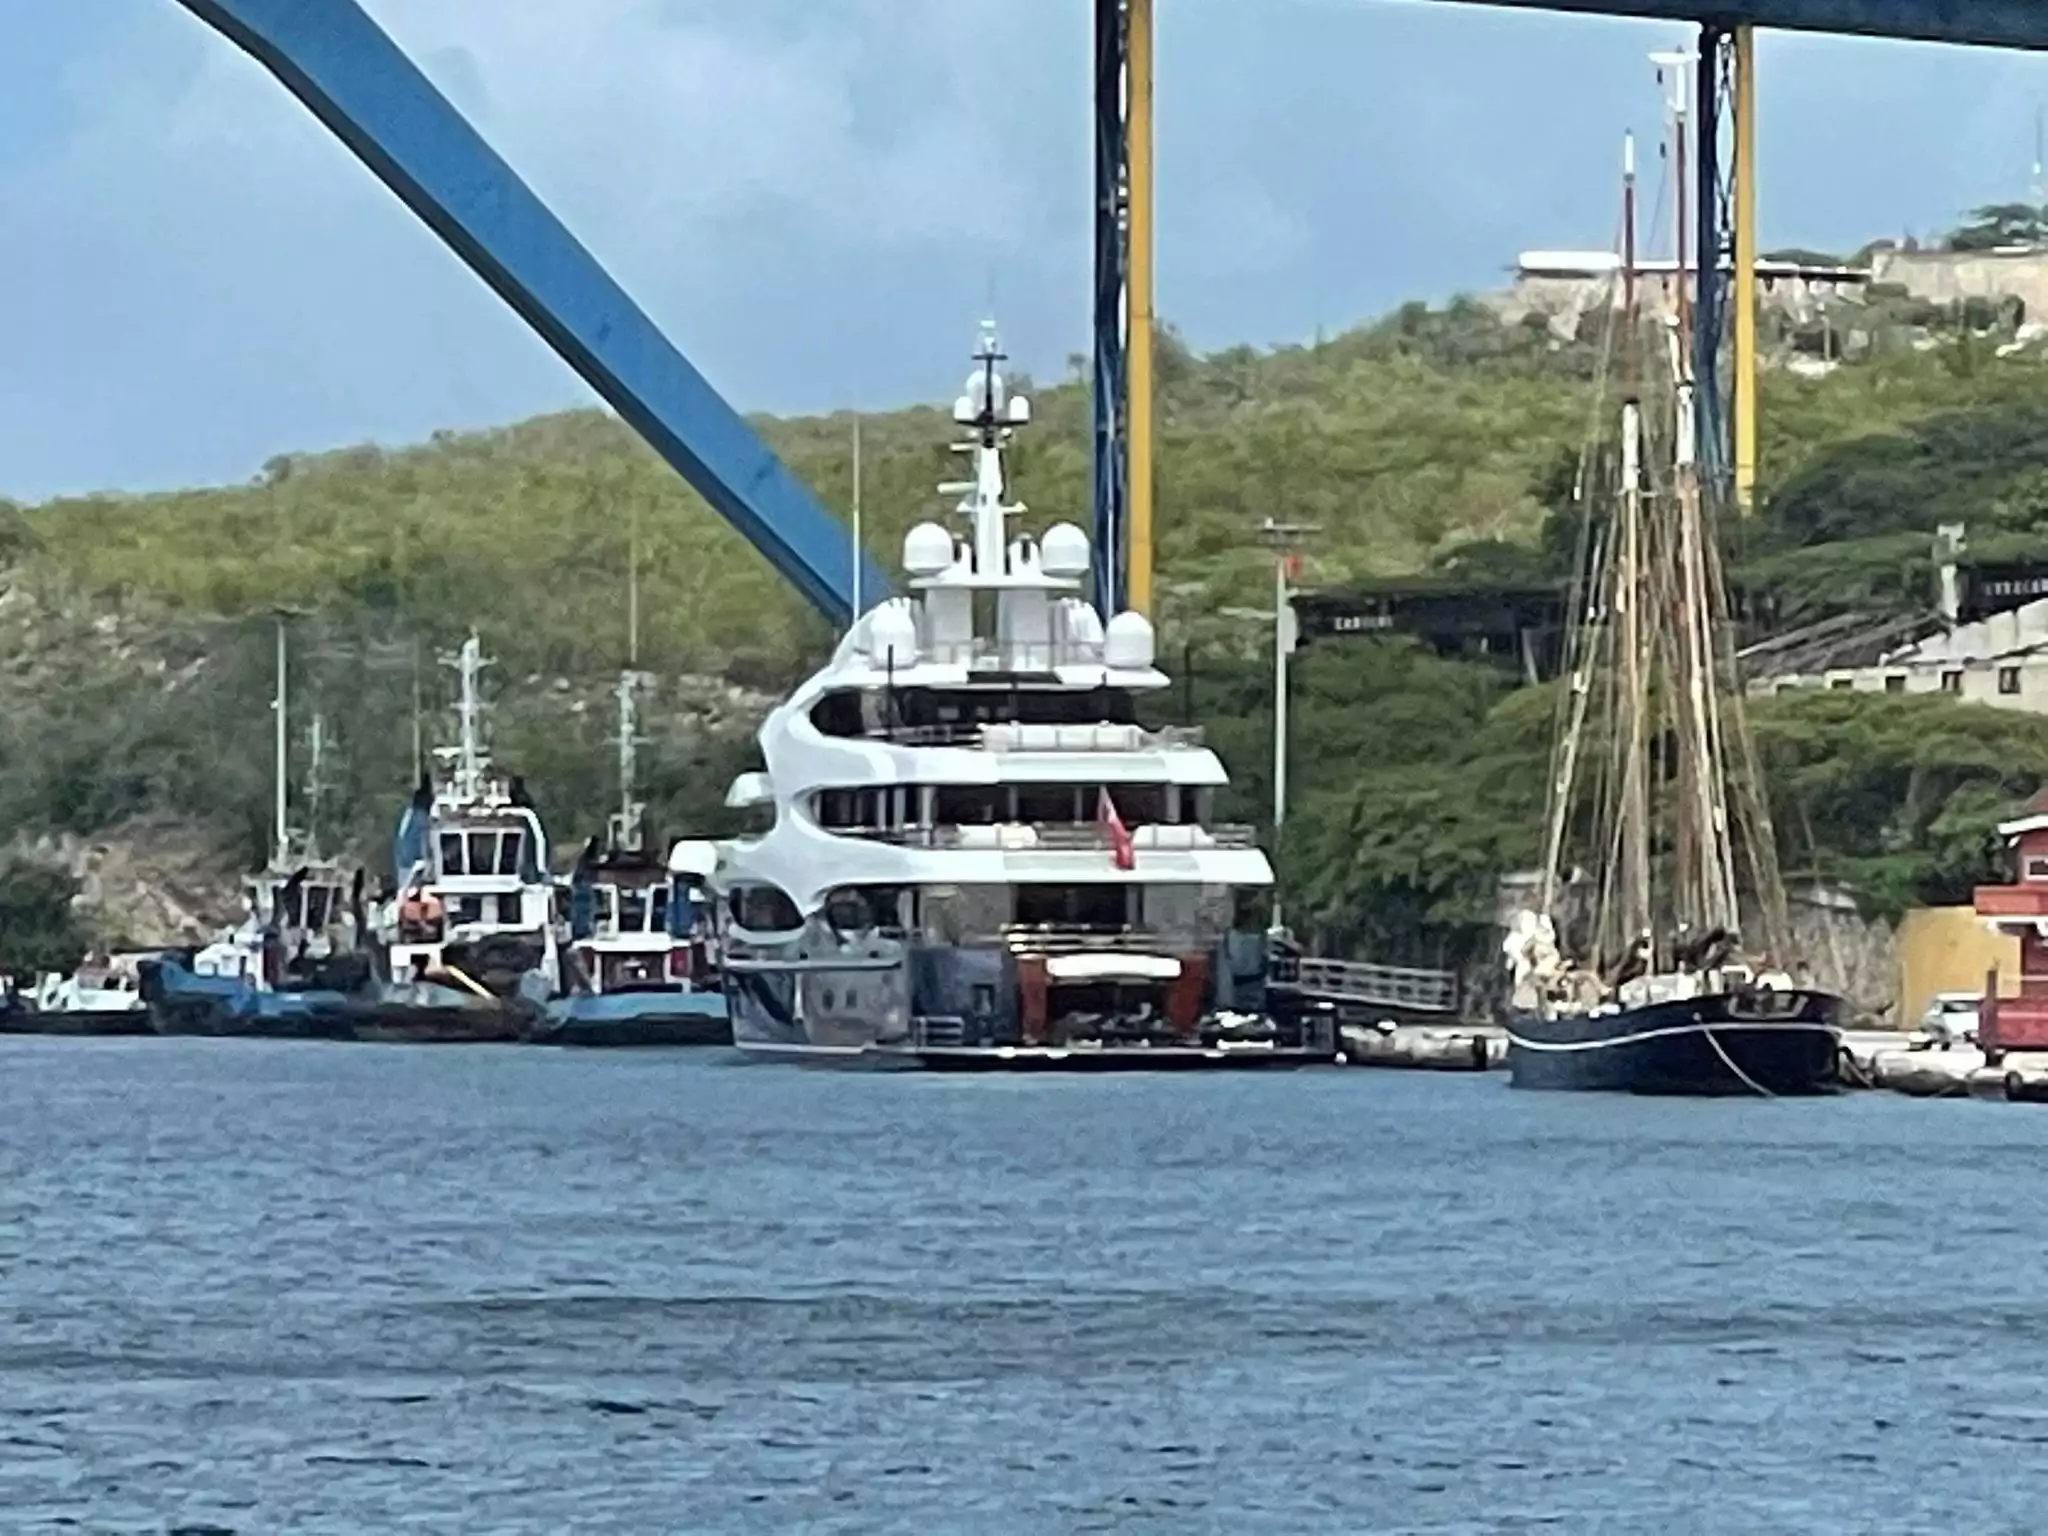 Die Oceanco-Yacht Barbara in Willemstad Curacao